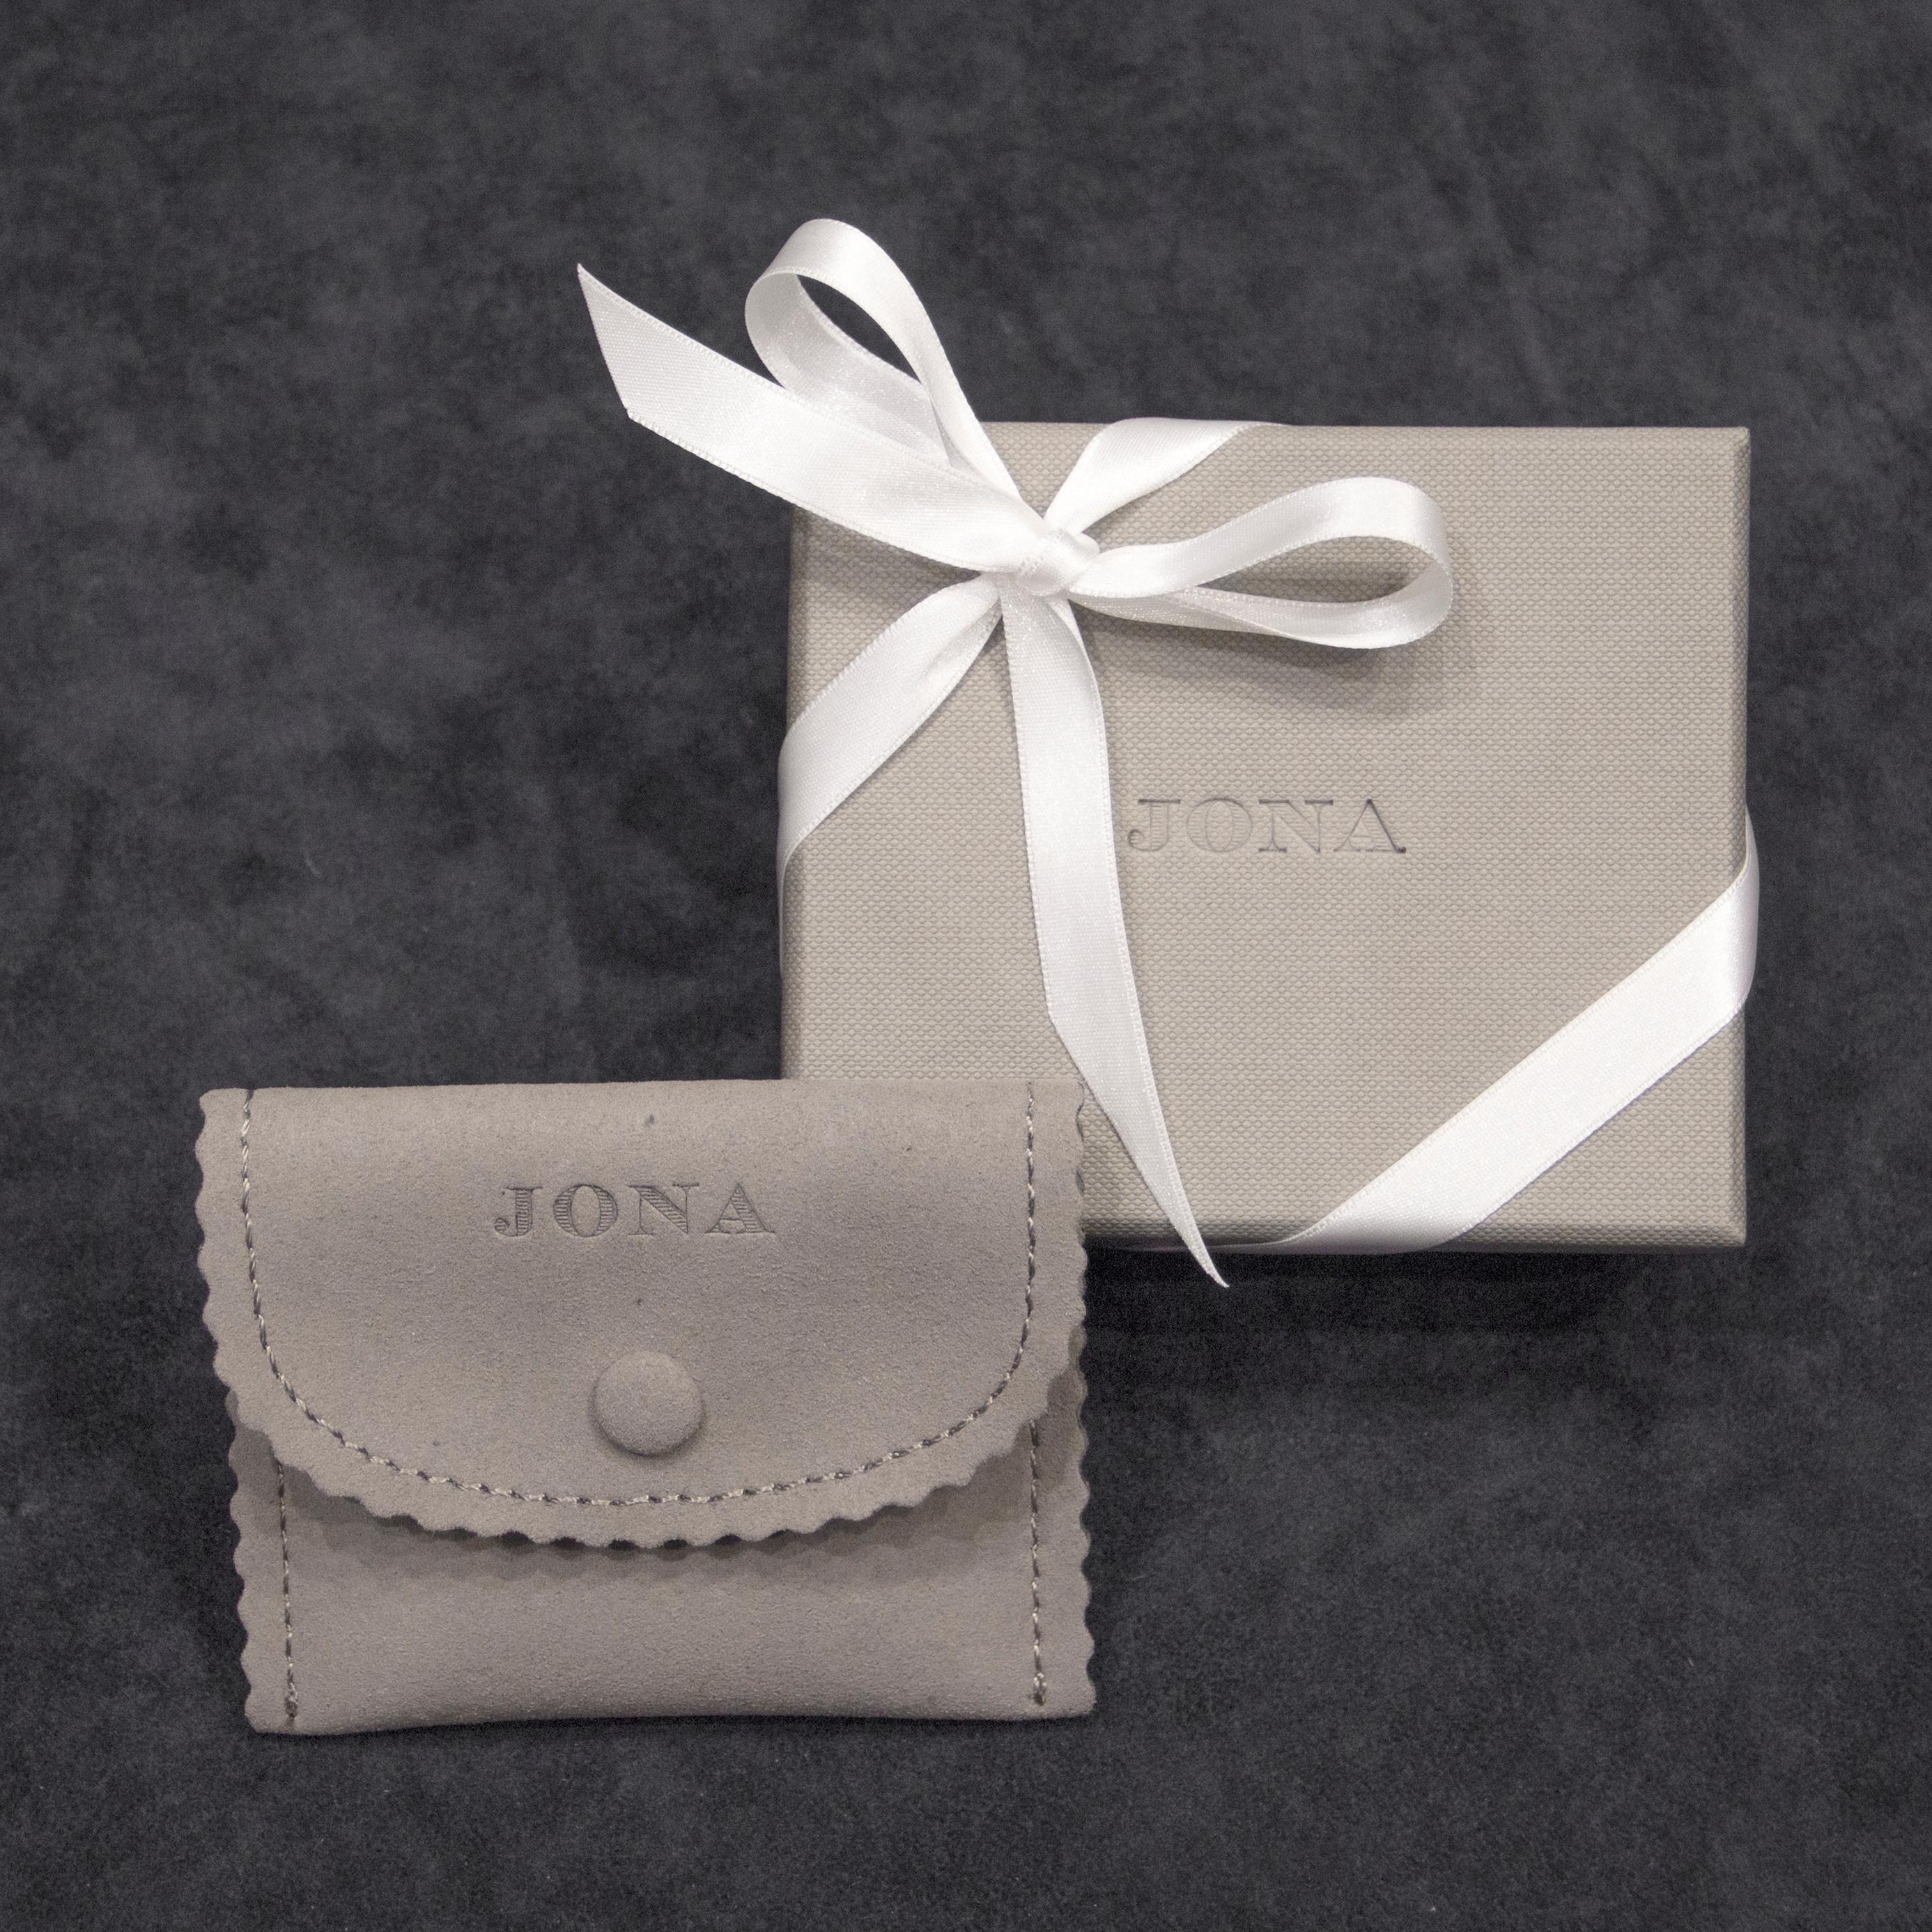 Jona White Diamond 18 Karat White Gold Bracelet 6